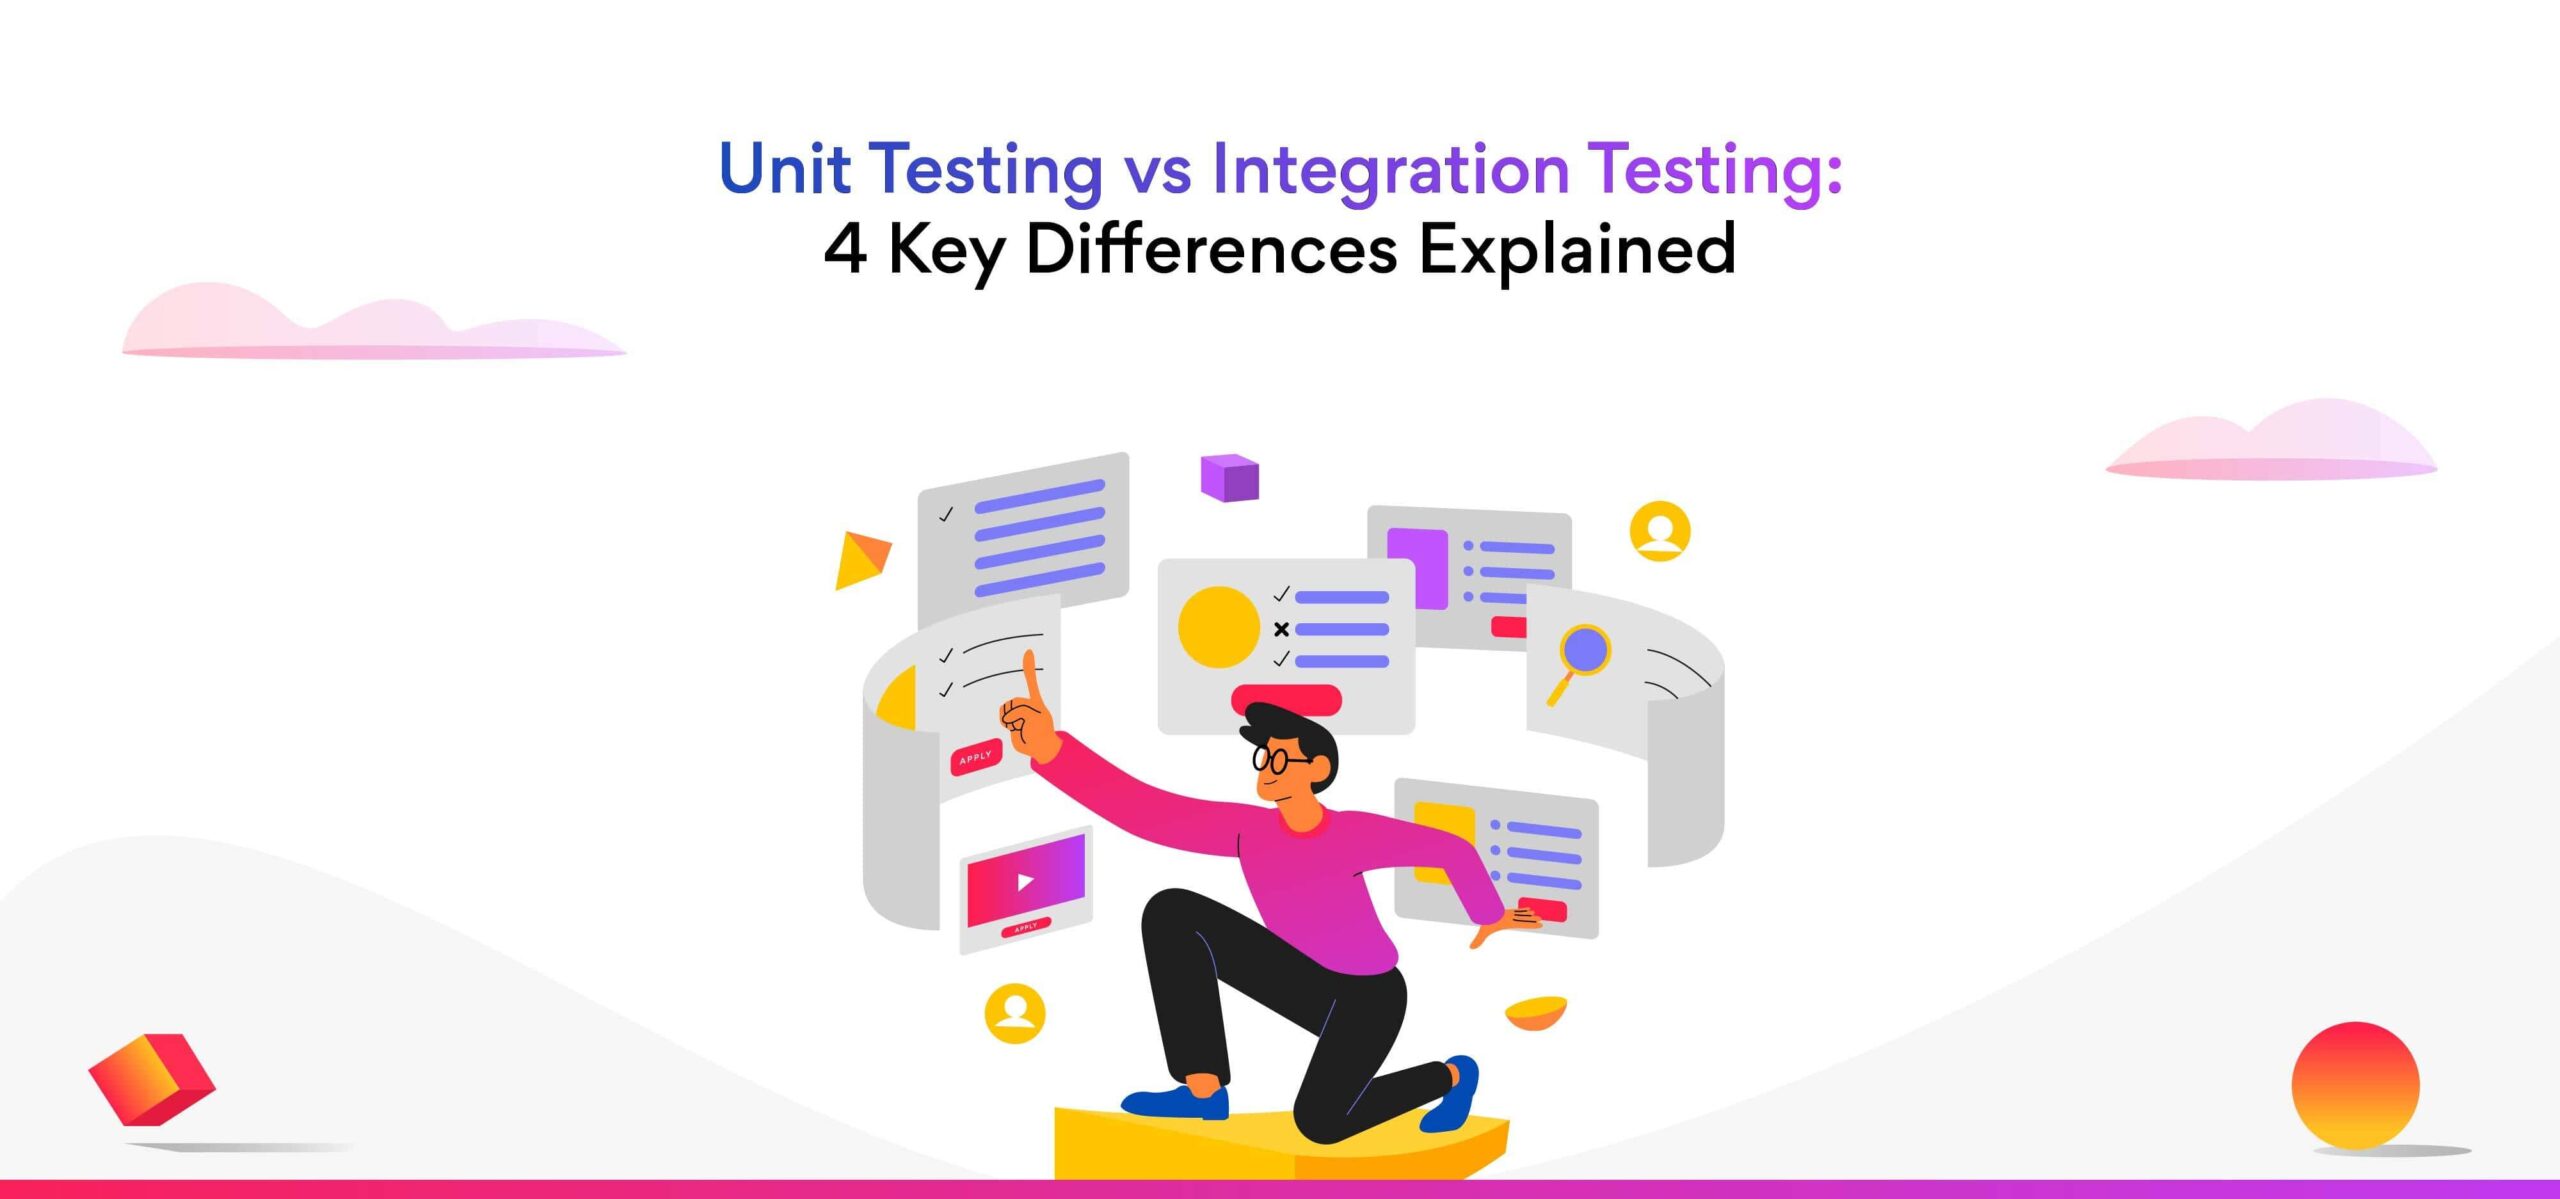 Unit testing vs integration testing: Key differences